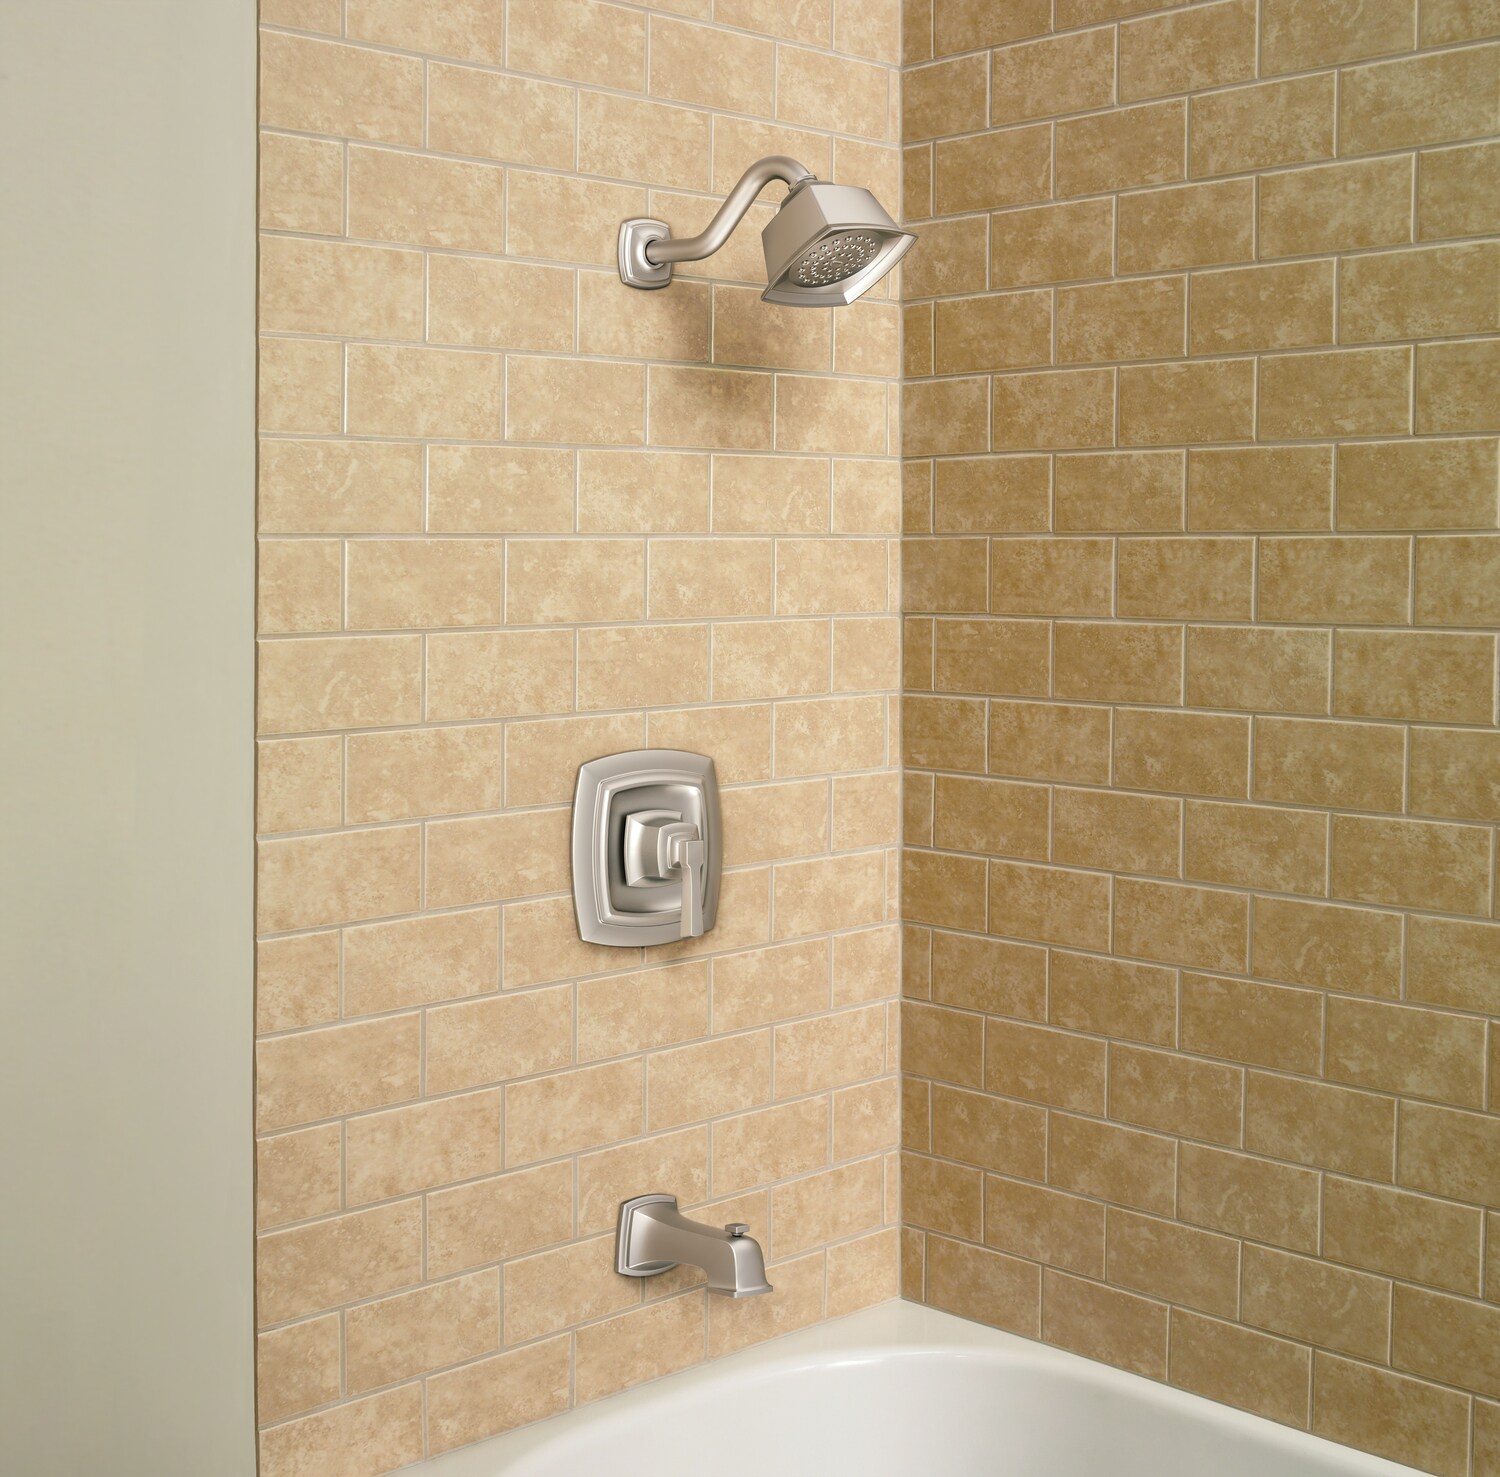 Moen Boardwalk Spot Resist Brushed Nickel 1-handle Bathtub and Shower Faucet Valve Included